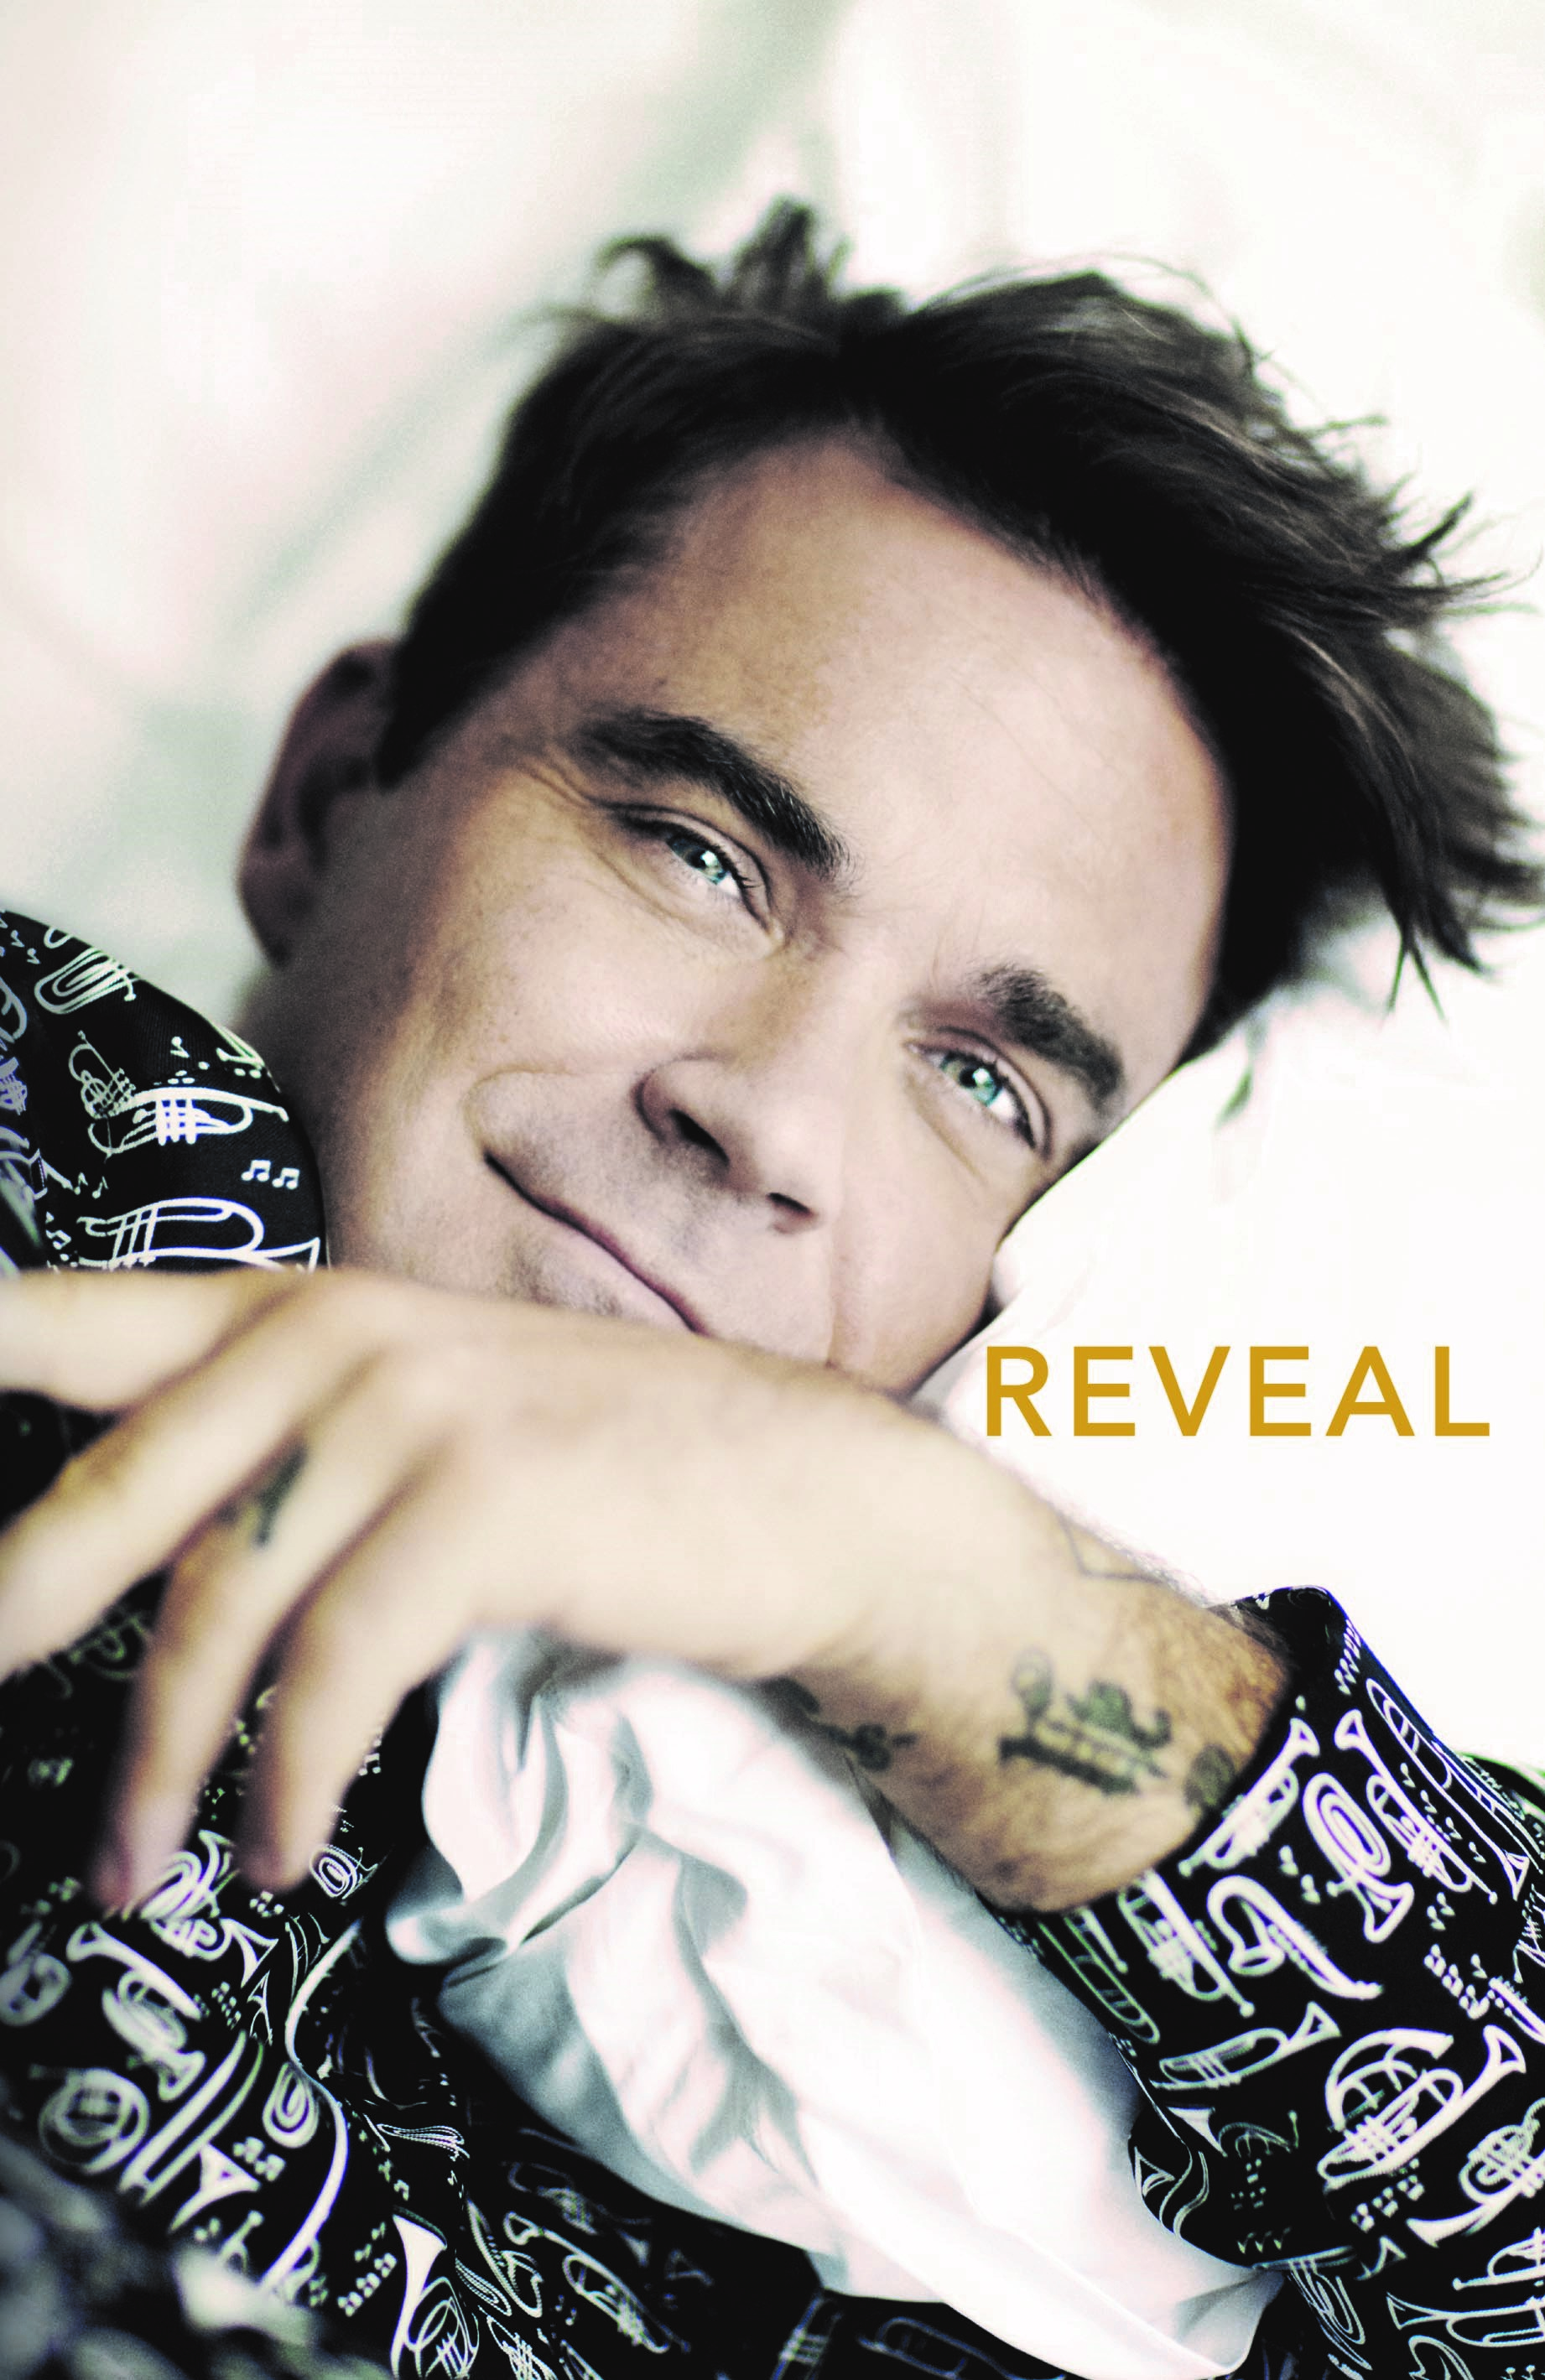 Robbie Williams' biography